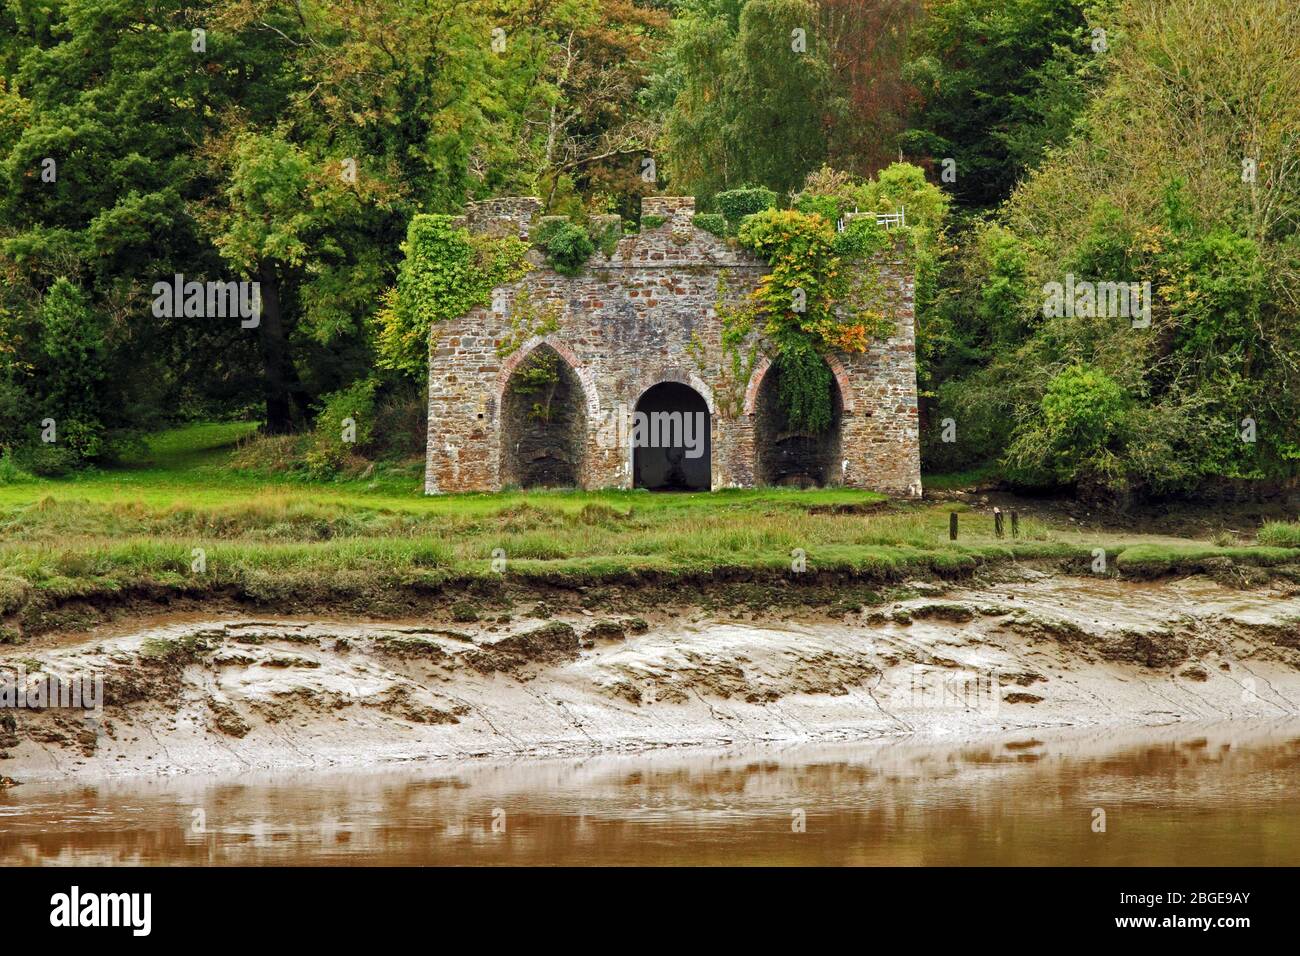 Old Lime Kiln on the River Torridge near Bideford, Devon, England. Stock Photo